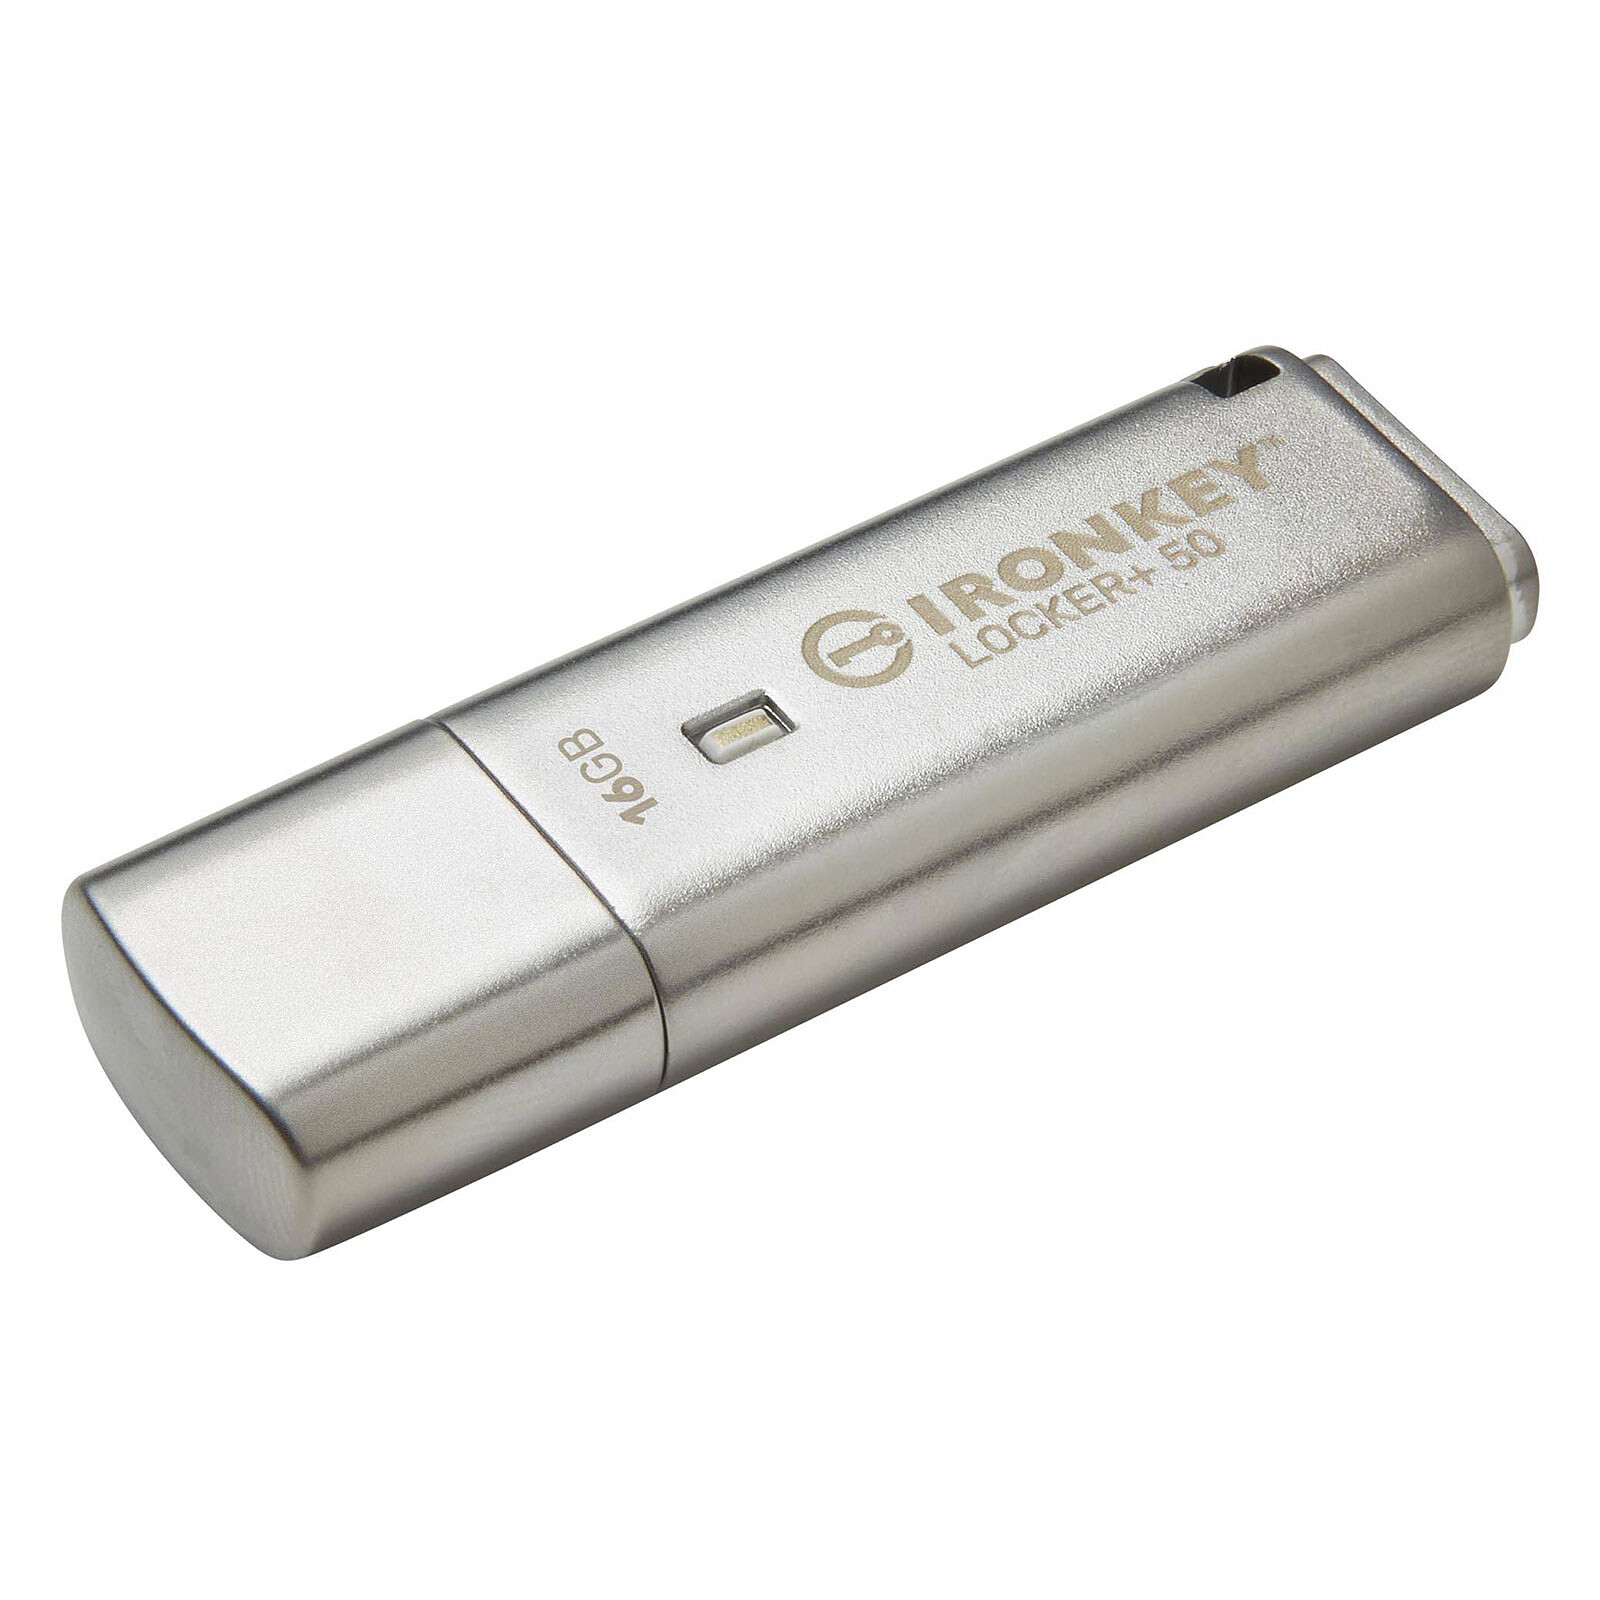 SanDisk Ultra Dual Drive Luxe USB-C 256 GB - Memoria USB - LDLC